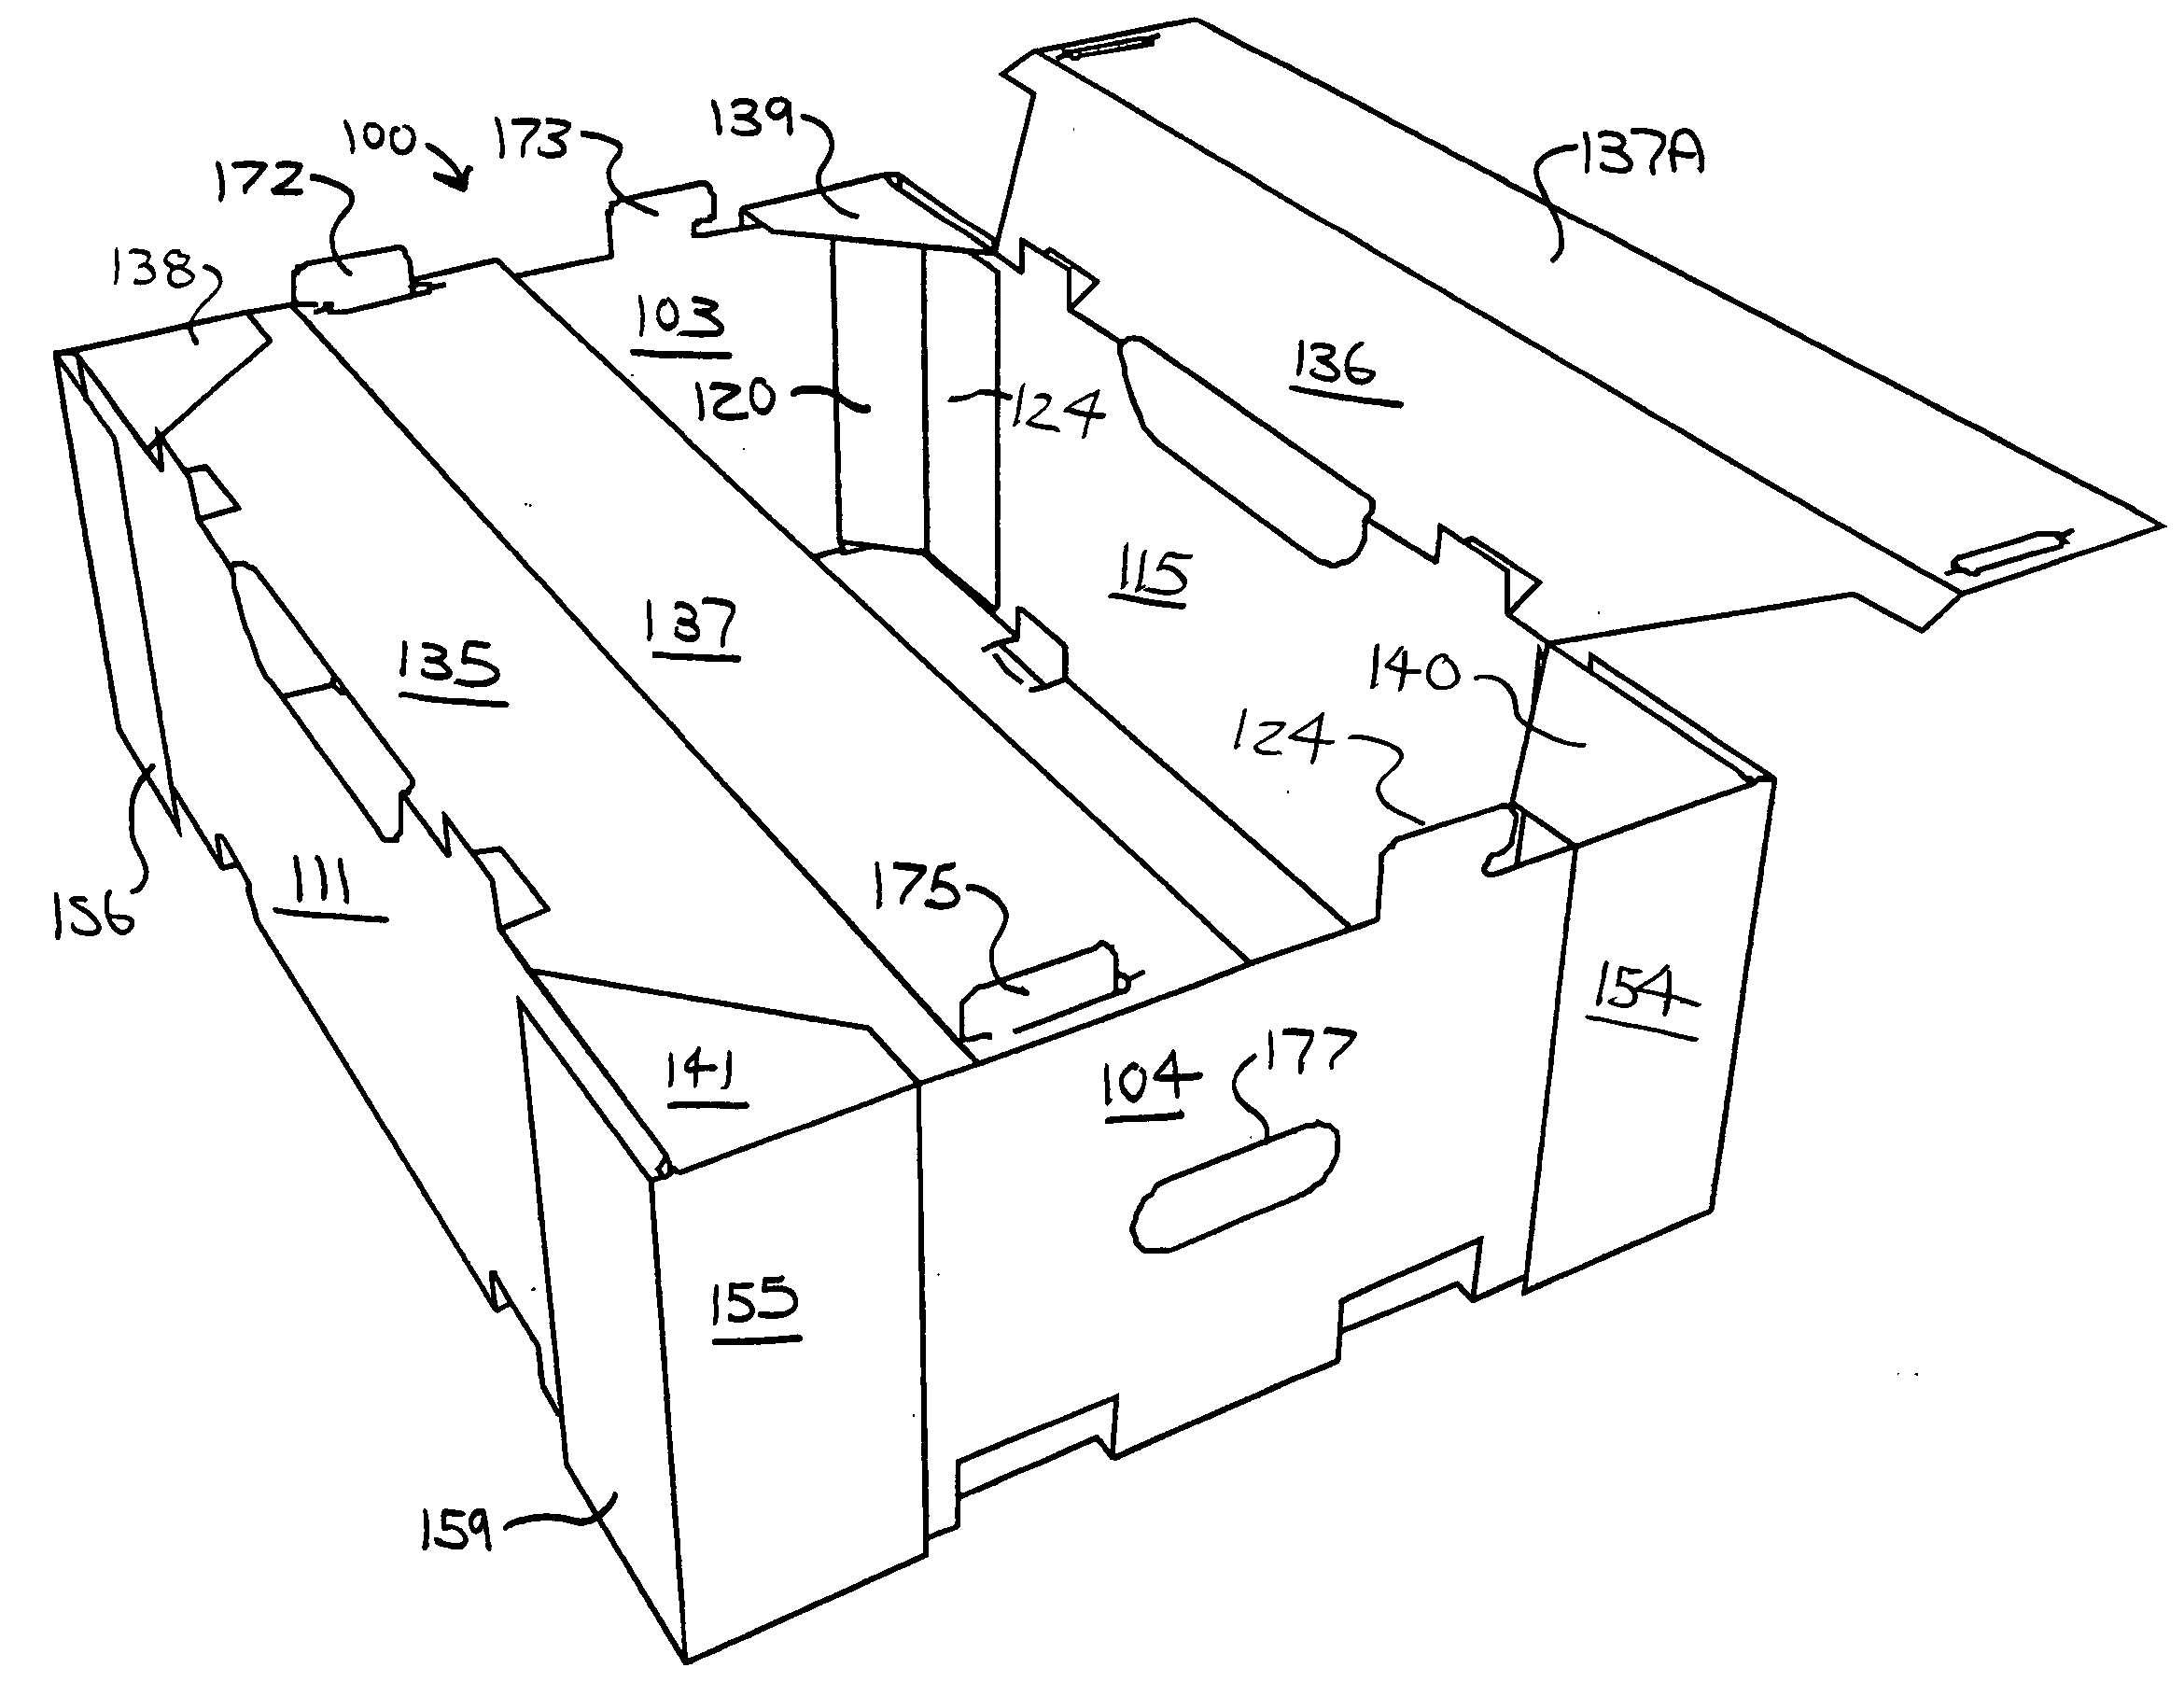 Integrated carton lid designs